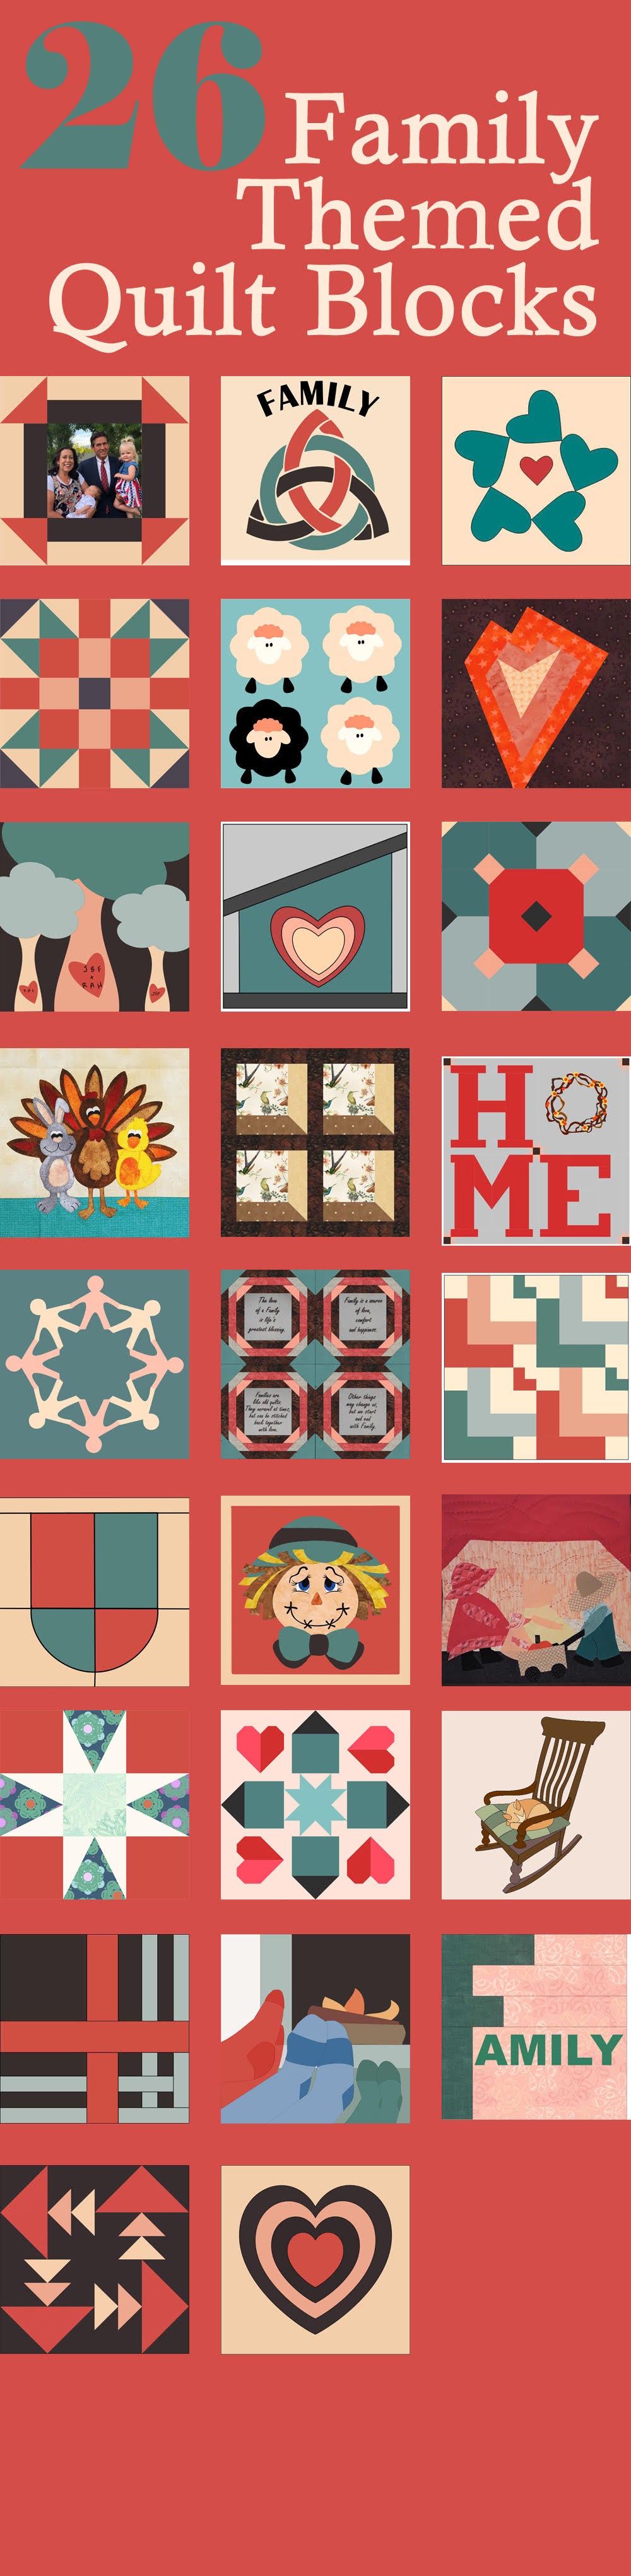 26 Free quilt block patterns